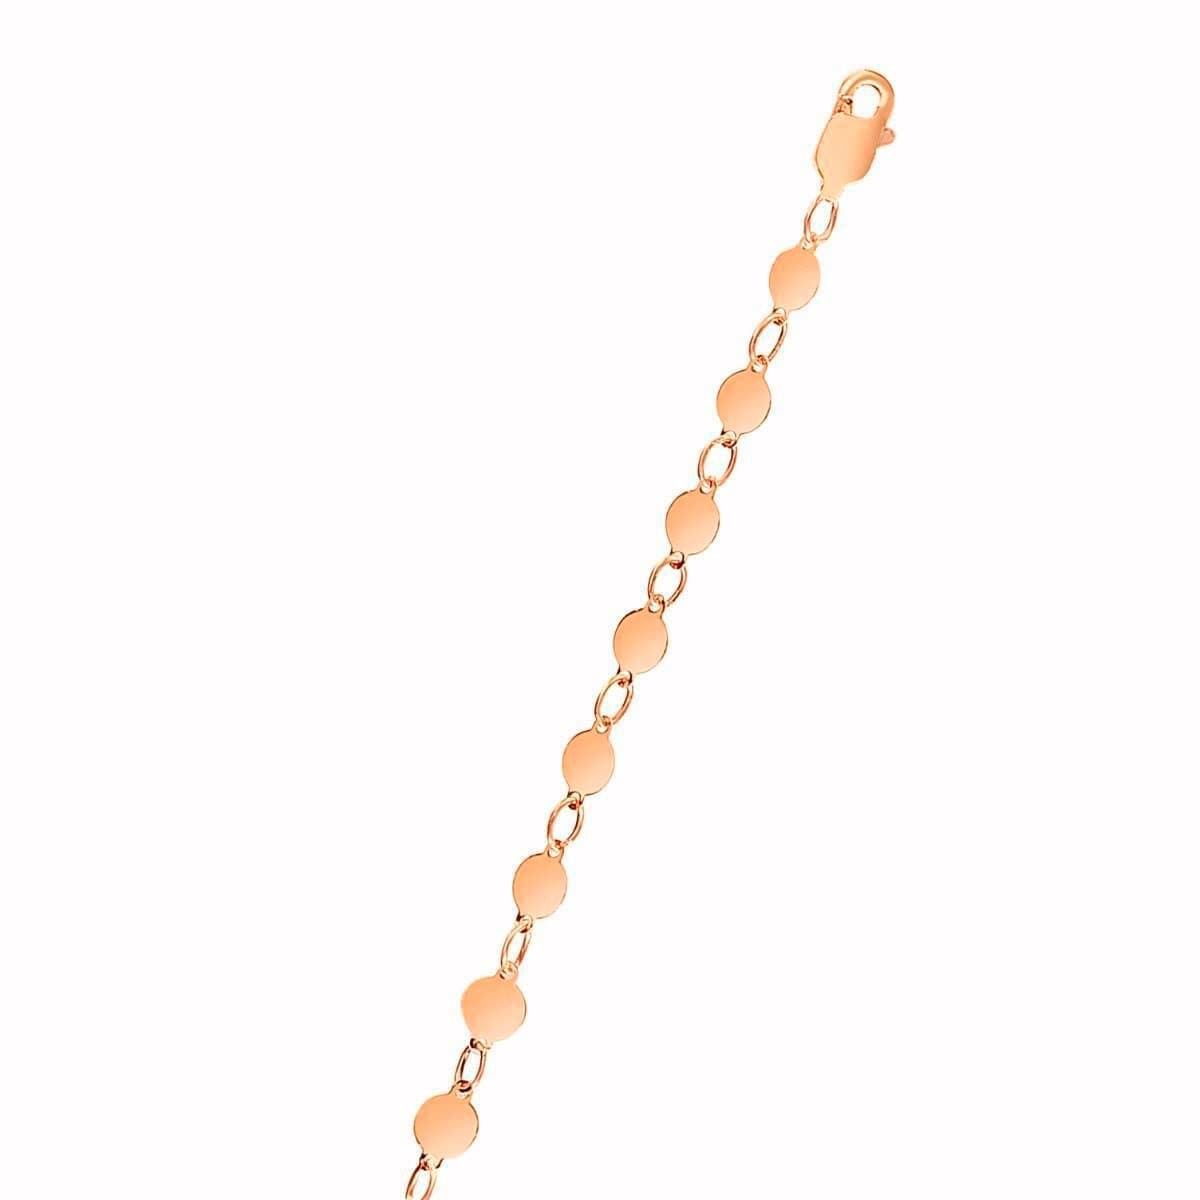 14k Gold Bracelet with Polished Circles